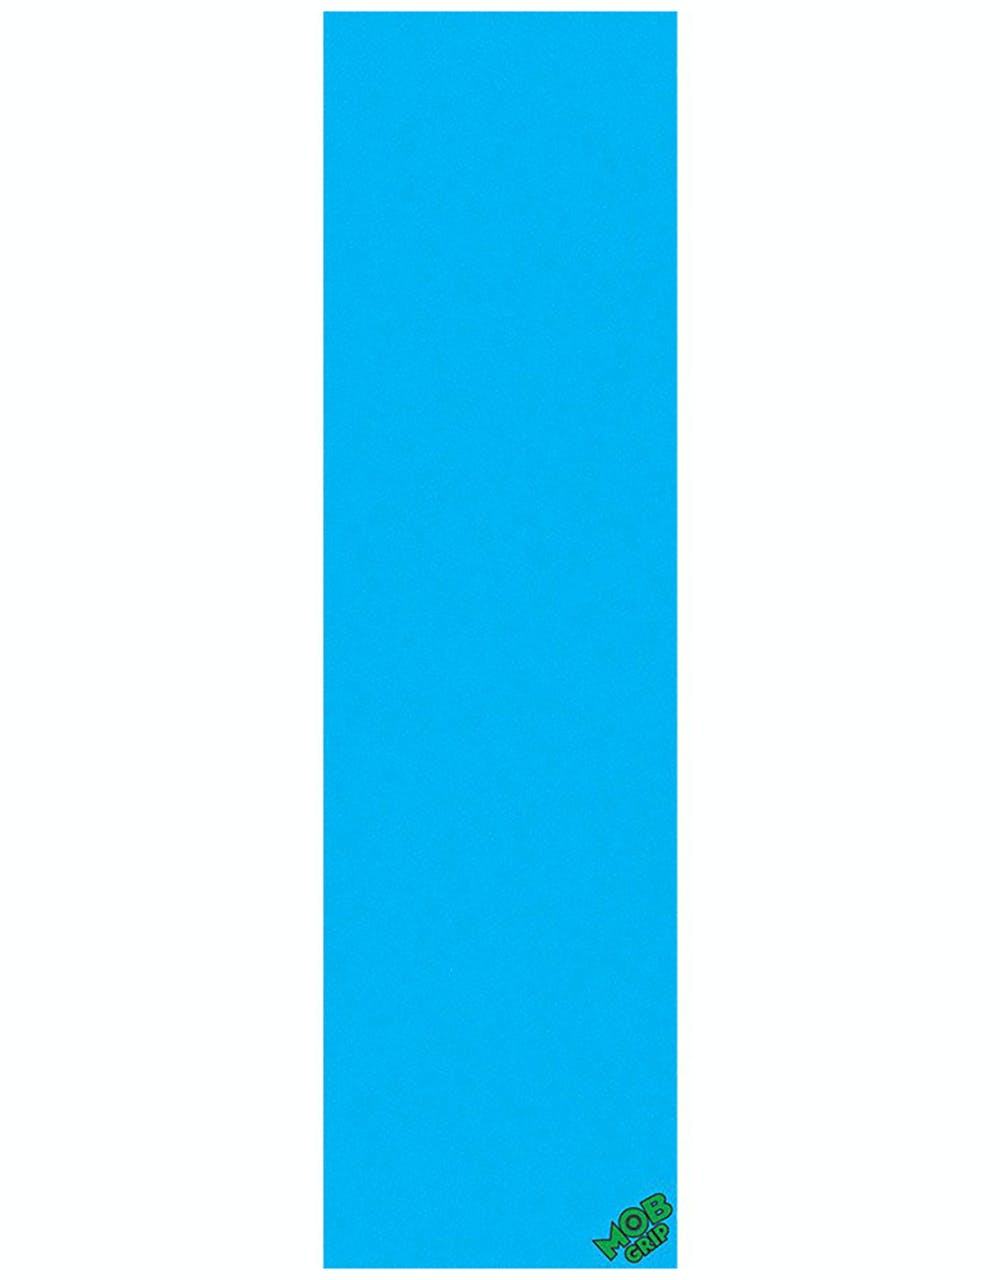 MOB 9" Grip Tape Sheet - Blue